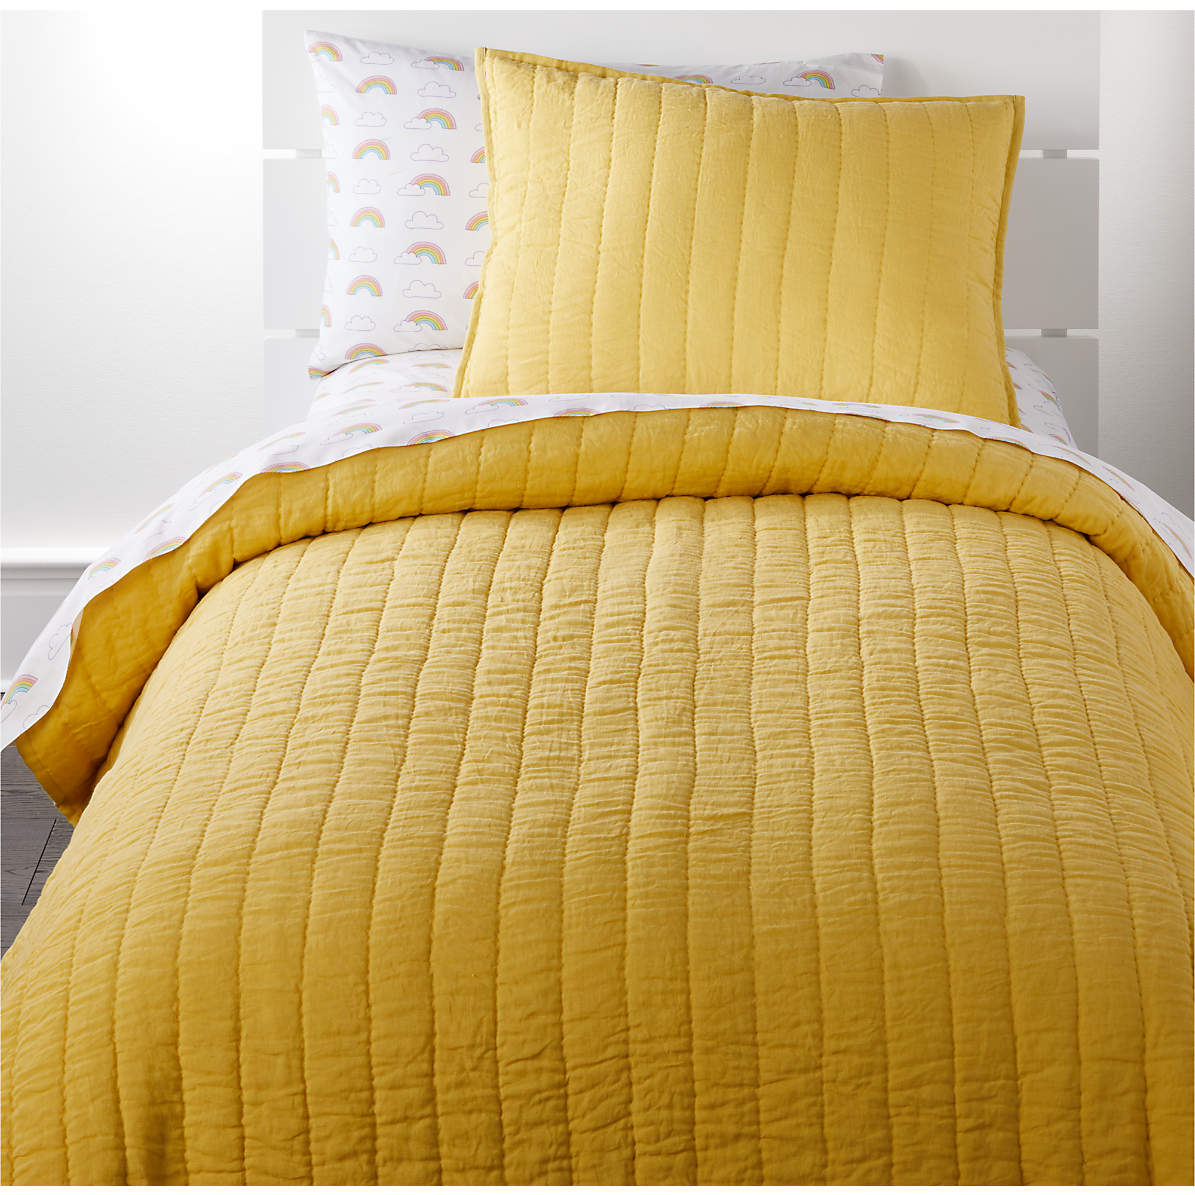 Linen Yellow Quilt Crate Kids, Blue Yellow Bedspreads Queen